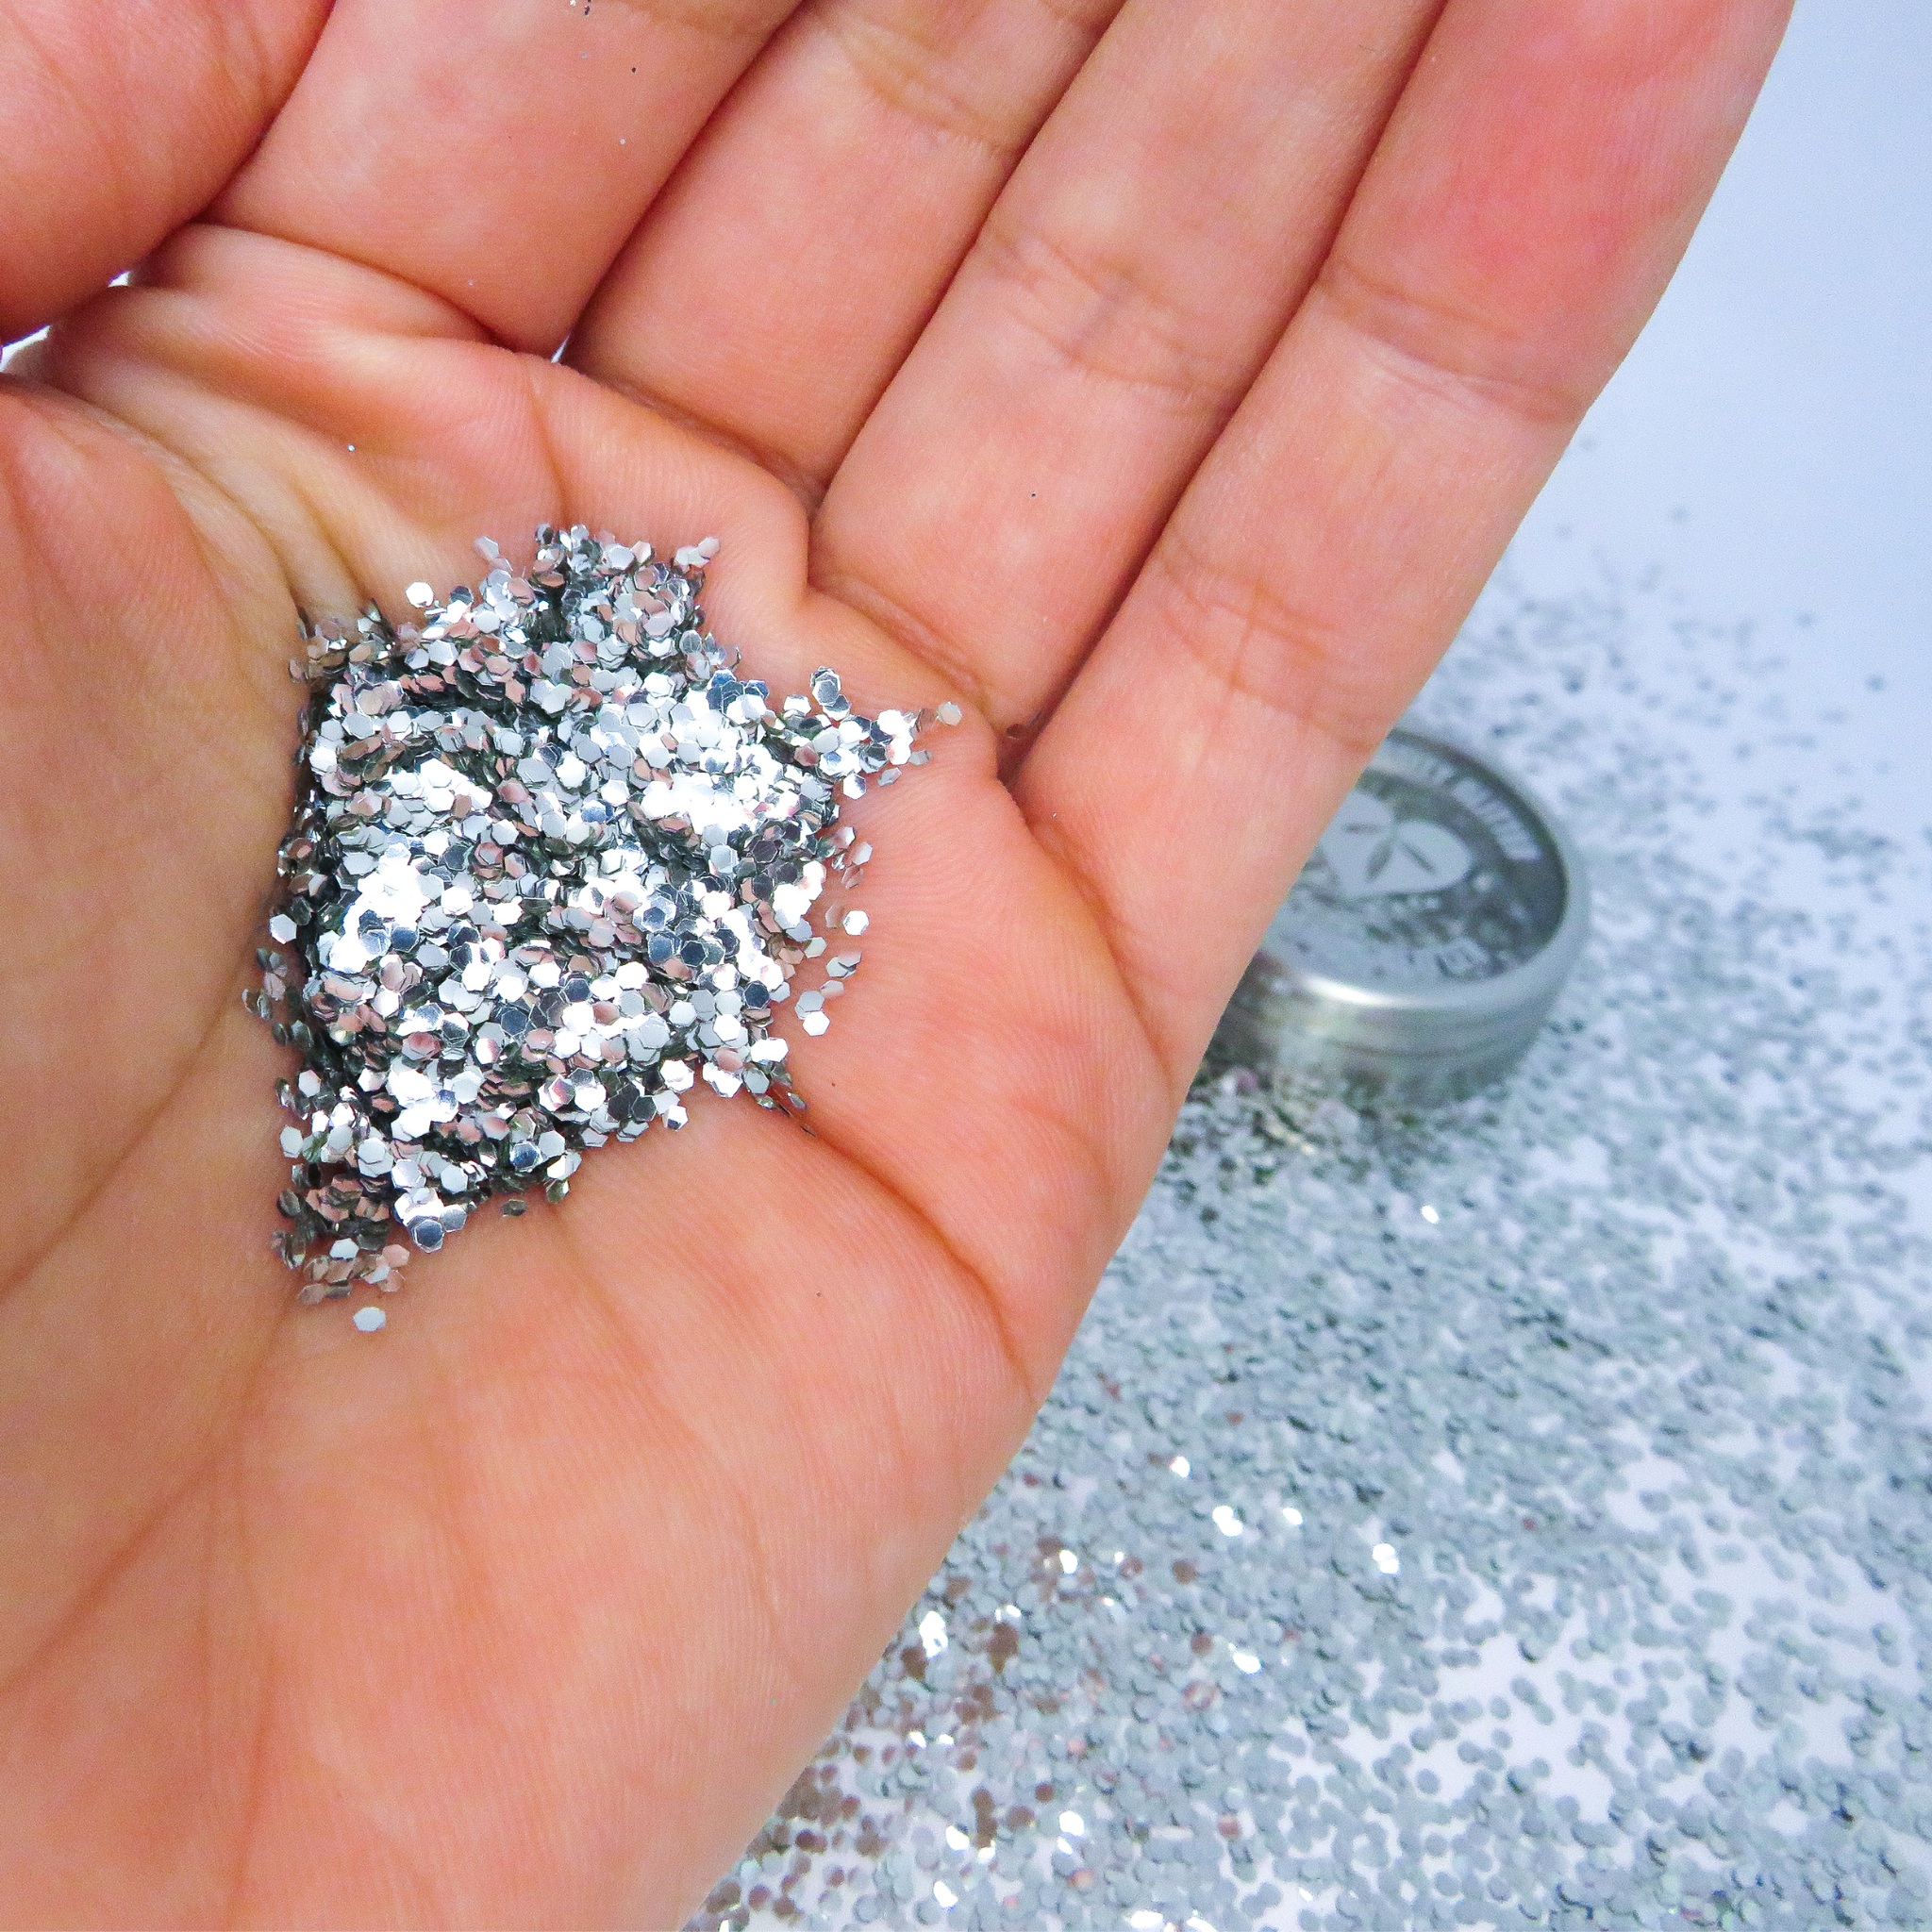 Silver chunky cosmetic biodegradable glitter by Luminosity Glitter